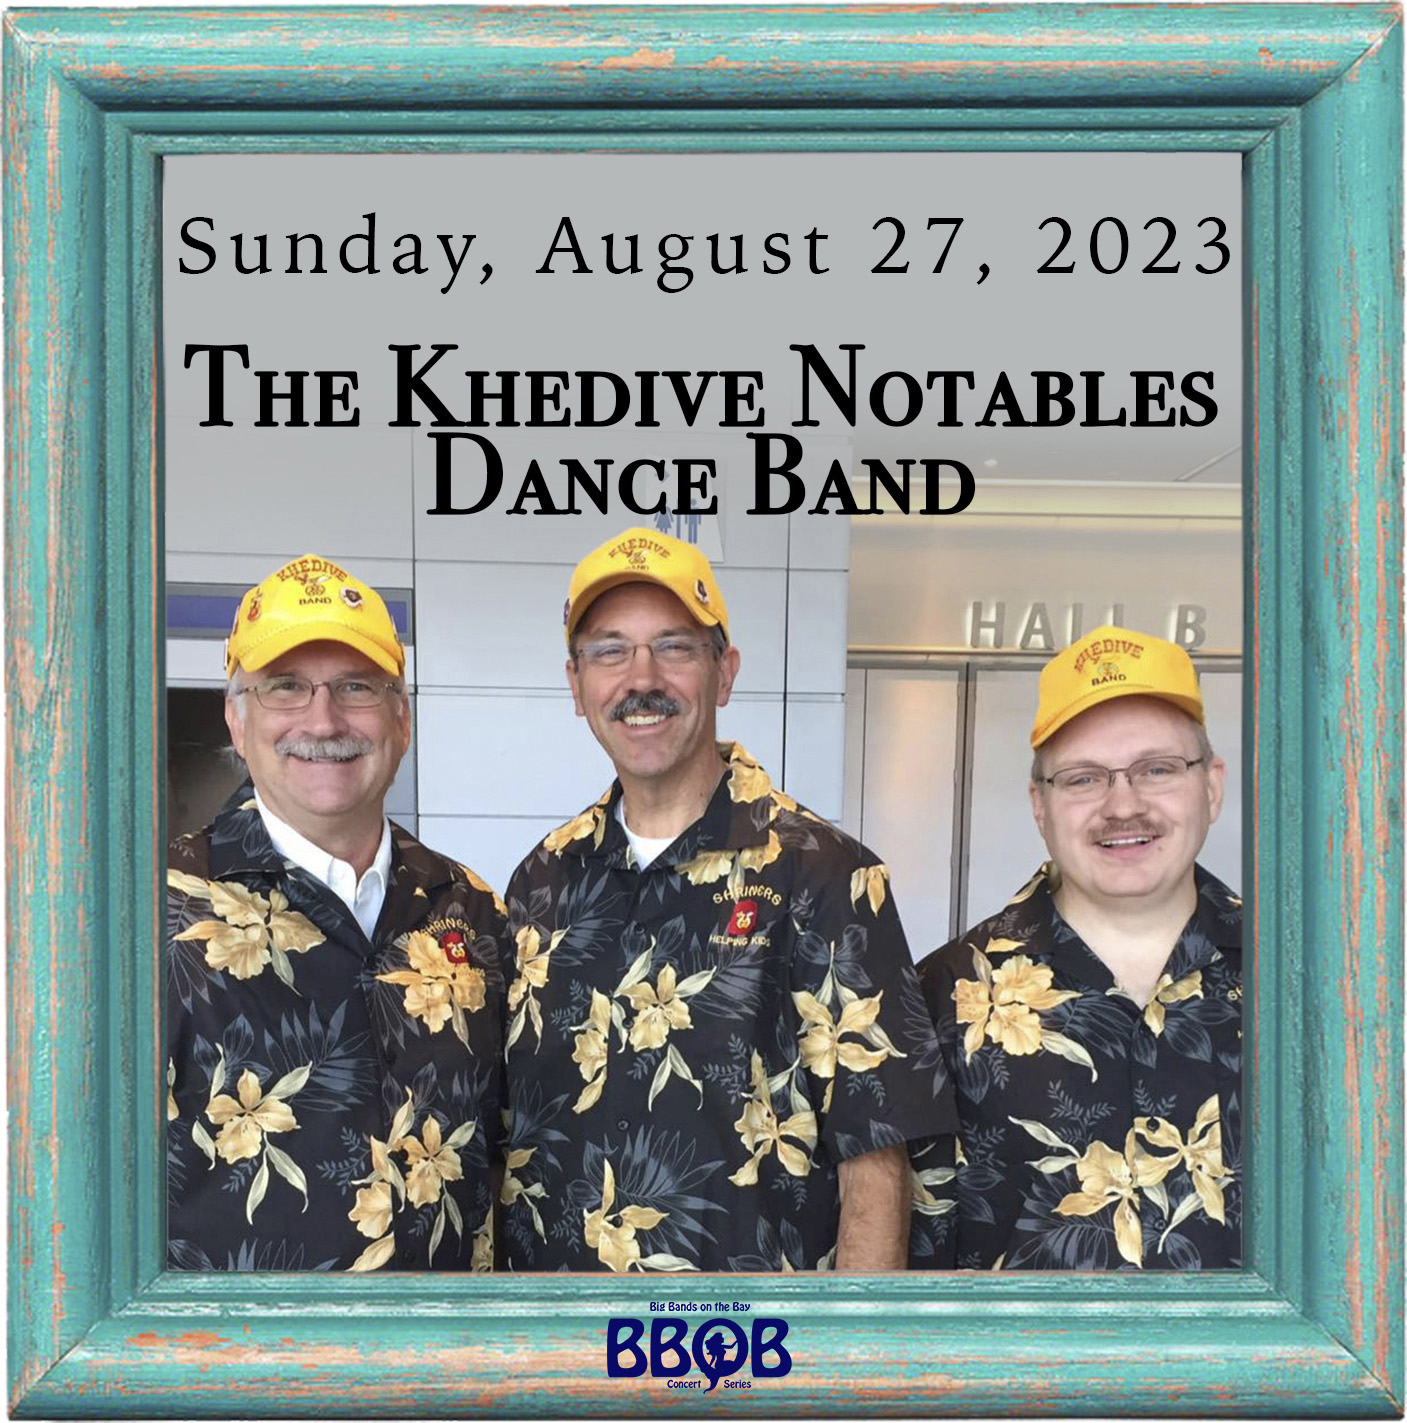 Big Band Dance Night - 10/28/2023 - Wasatch Show Band